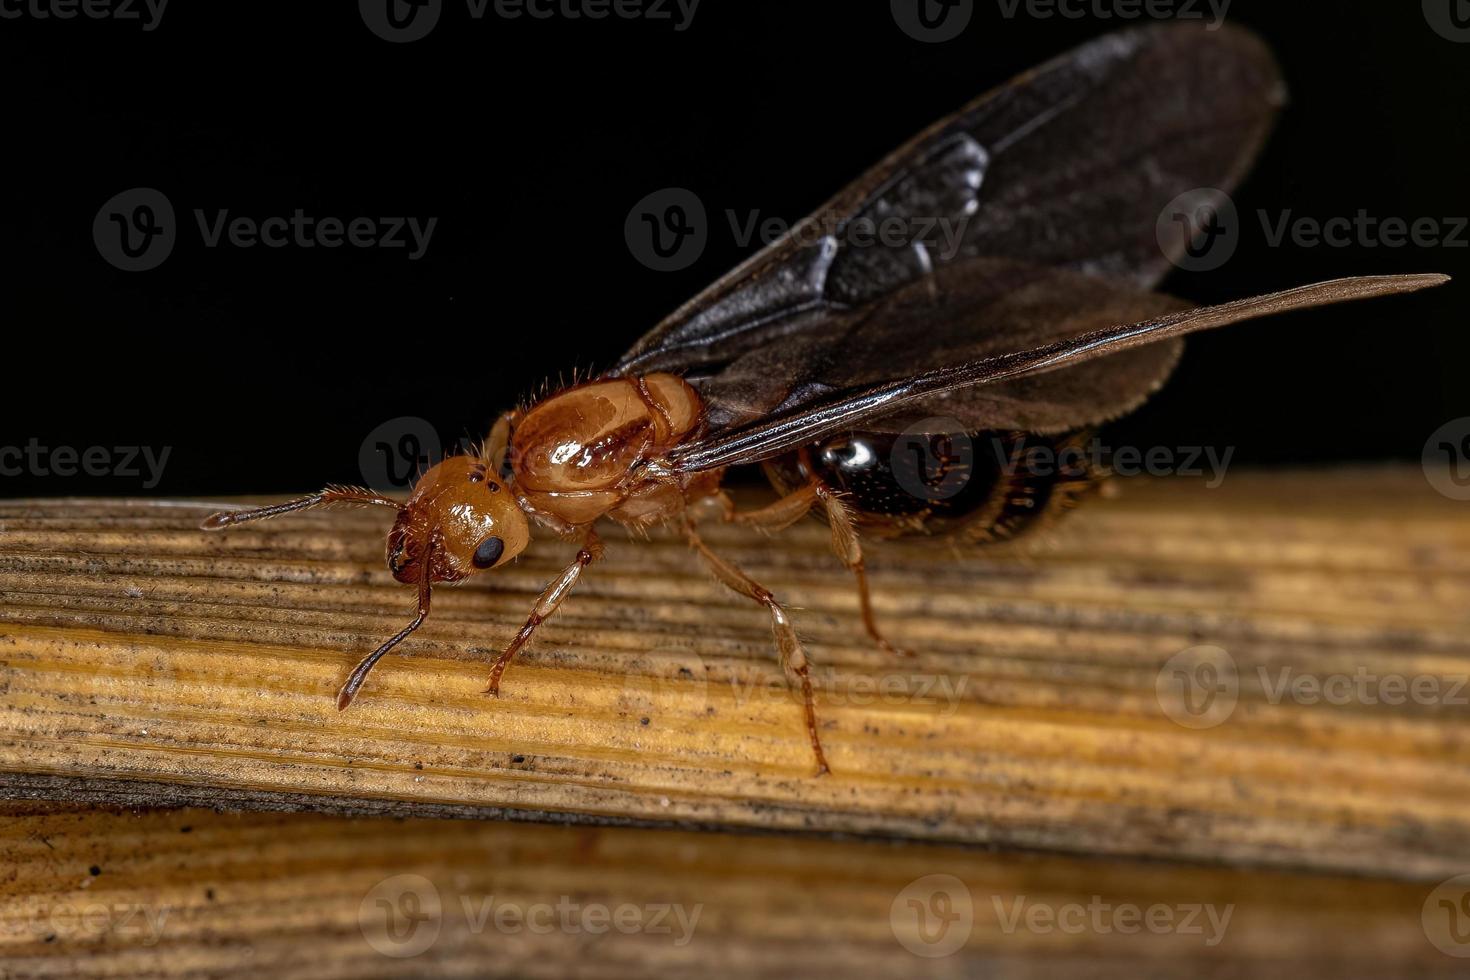 hormiga reina cóctel alada hembra adulta foto